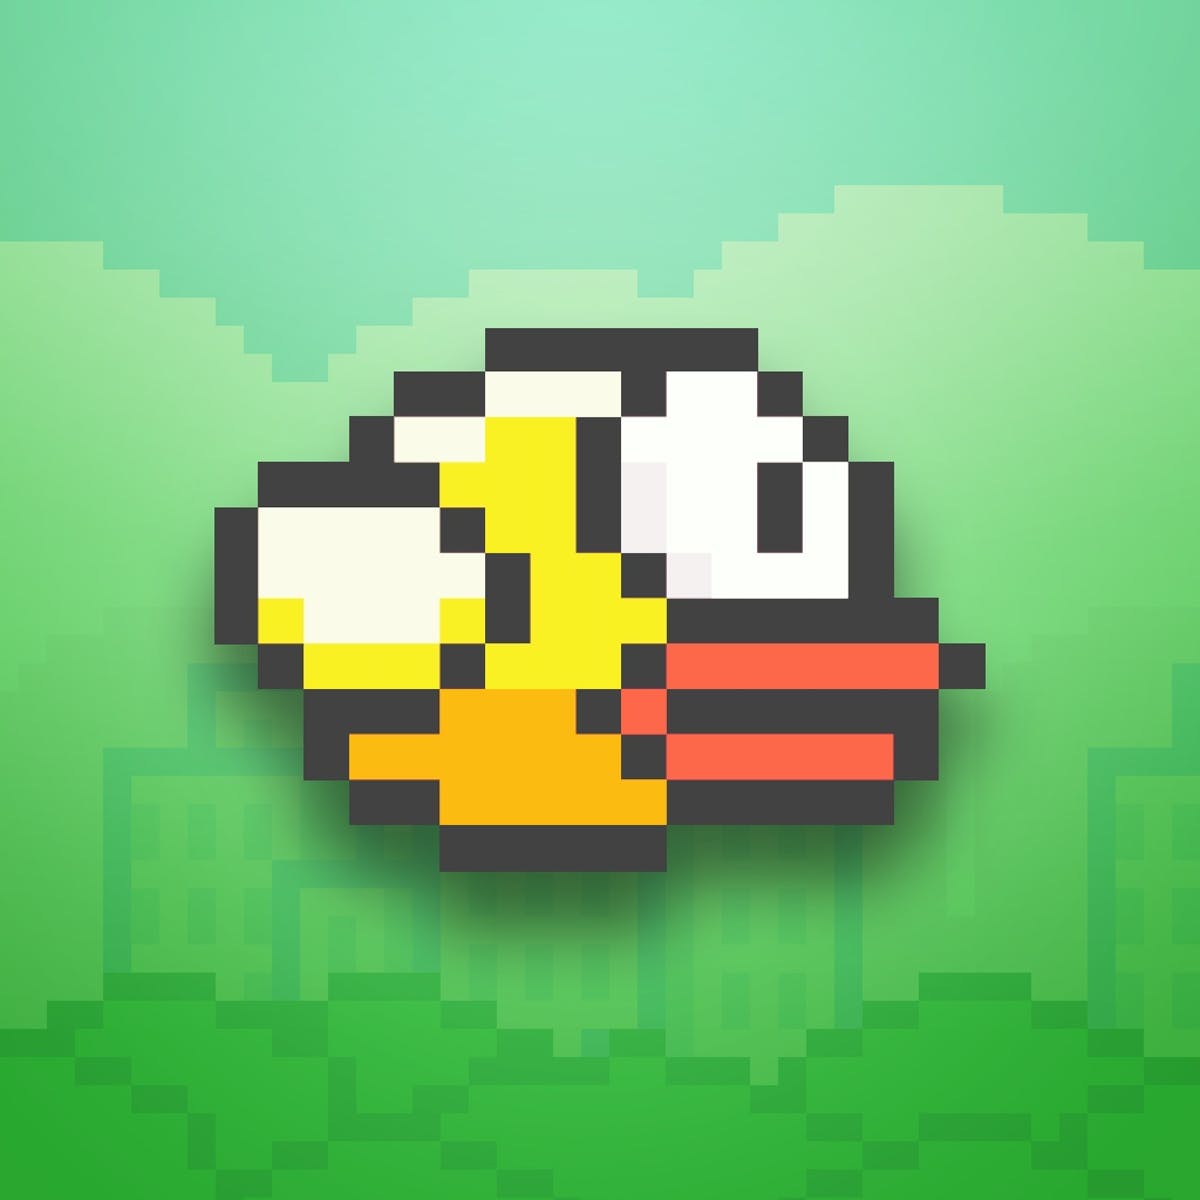 PyGame Flappy Bird Clone